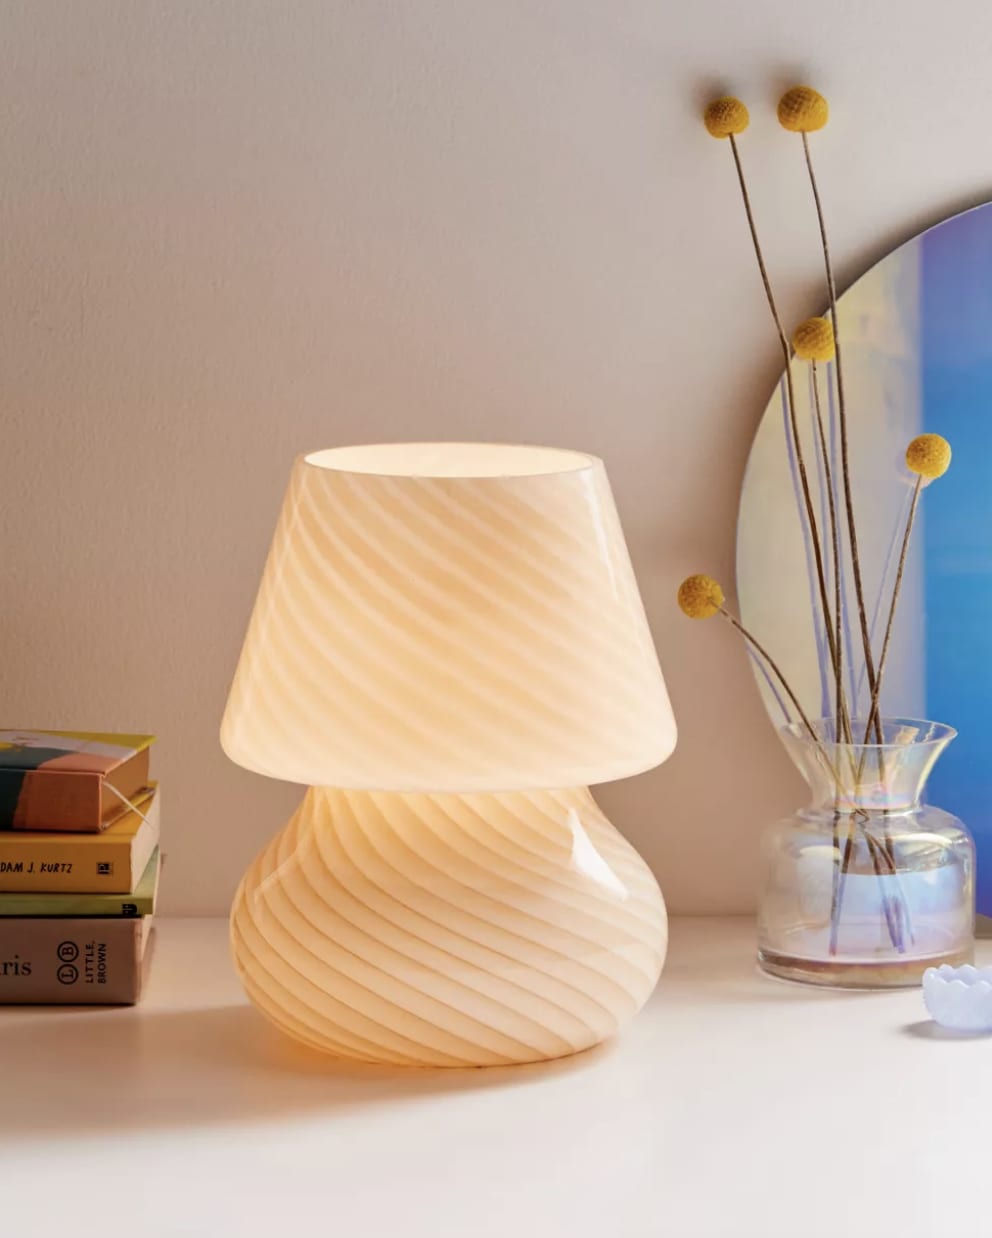 The Best Mushroom Lamps - Murano Glass Mushroom Lamp Trend